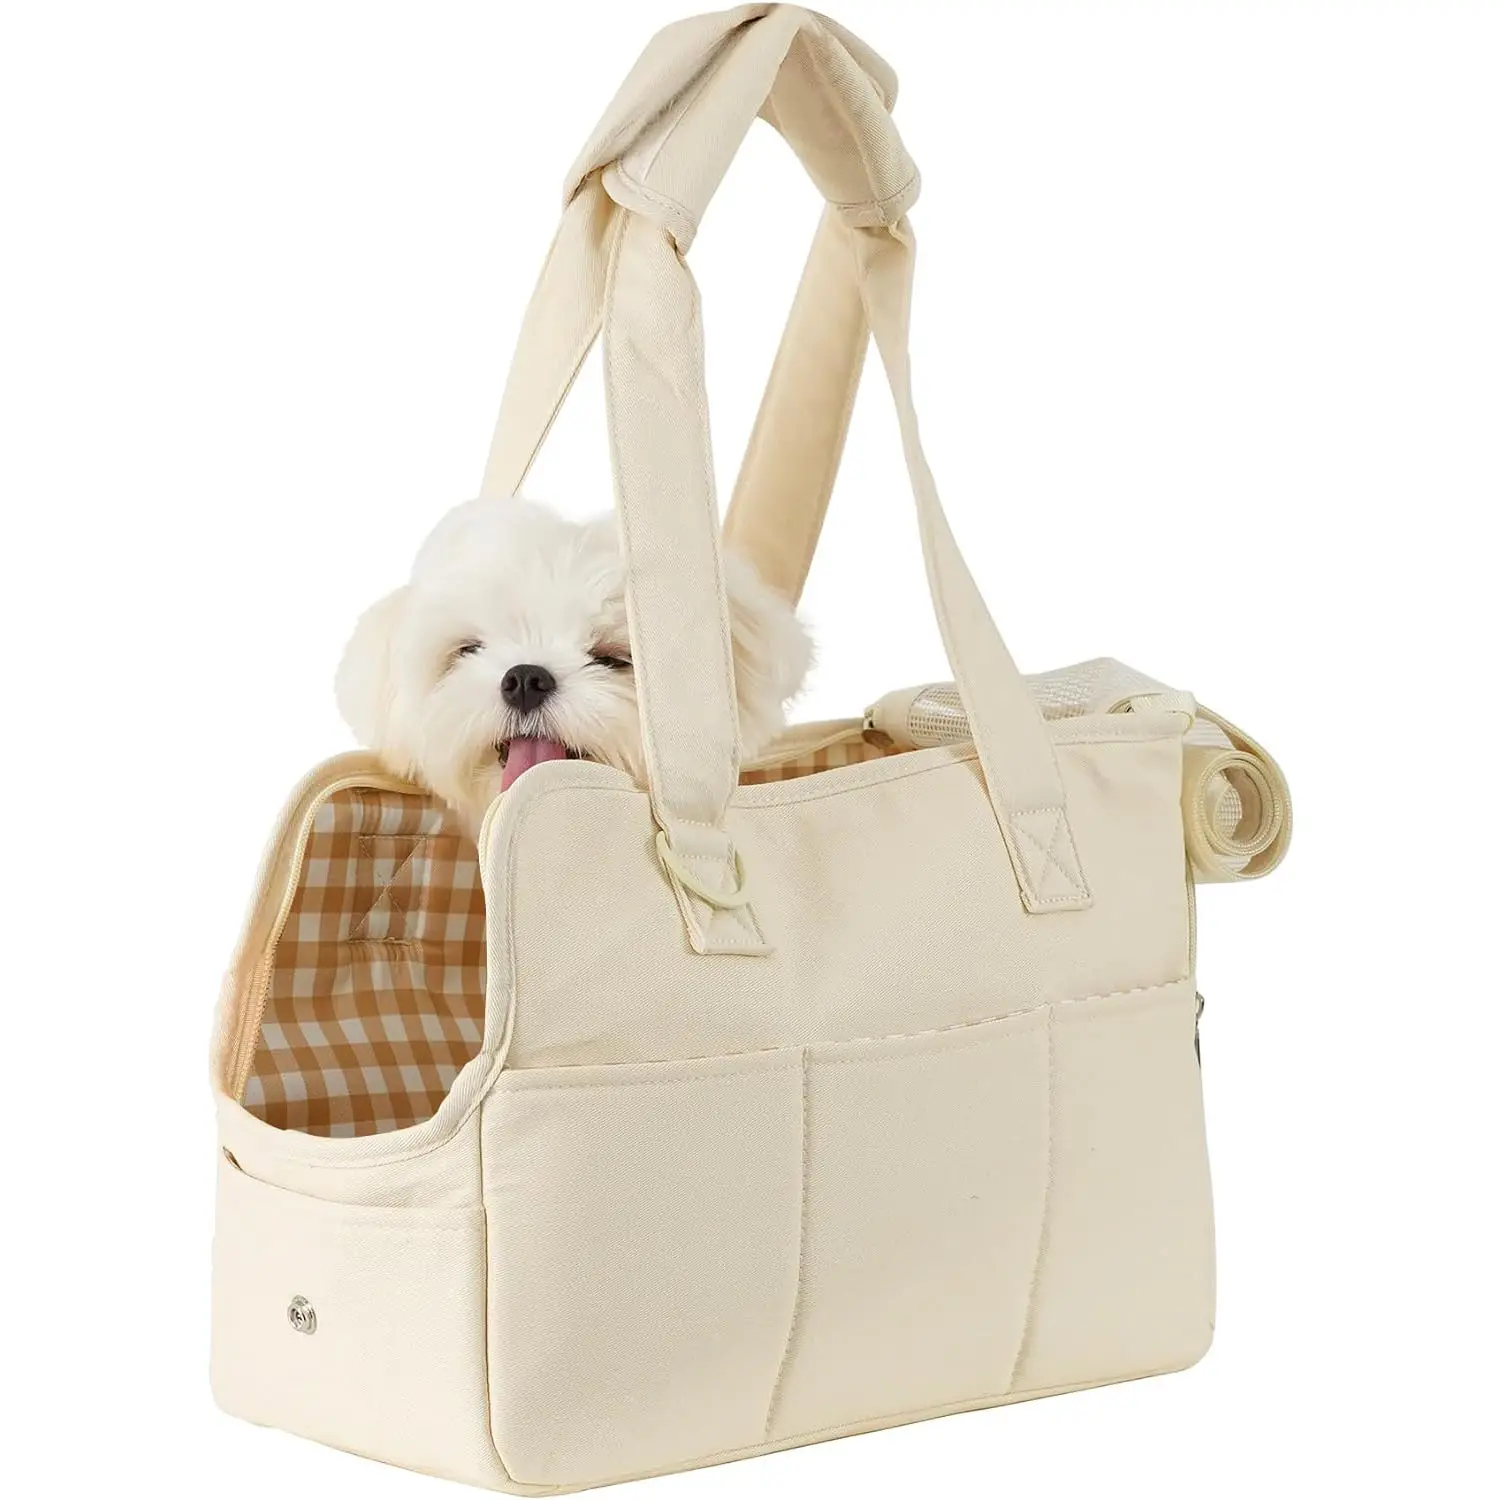 Lujo multi-colores moda perro multifunción cachorro mascota portador bandolera mochila